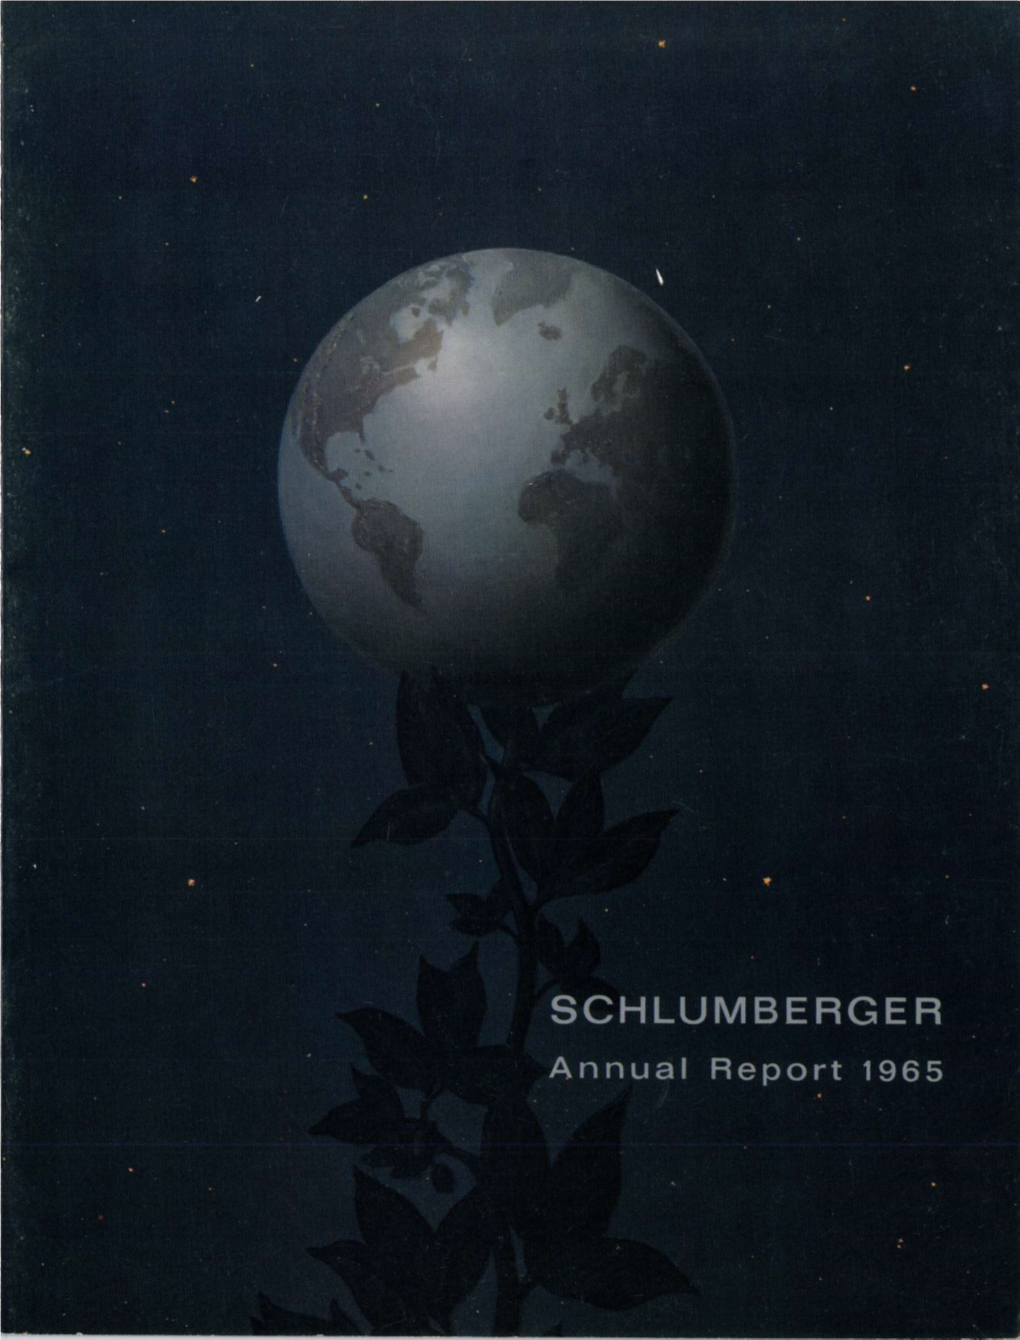 SCHLUMBERGER Annual Report 1965